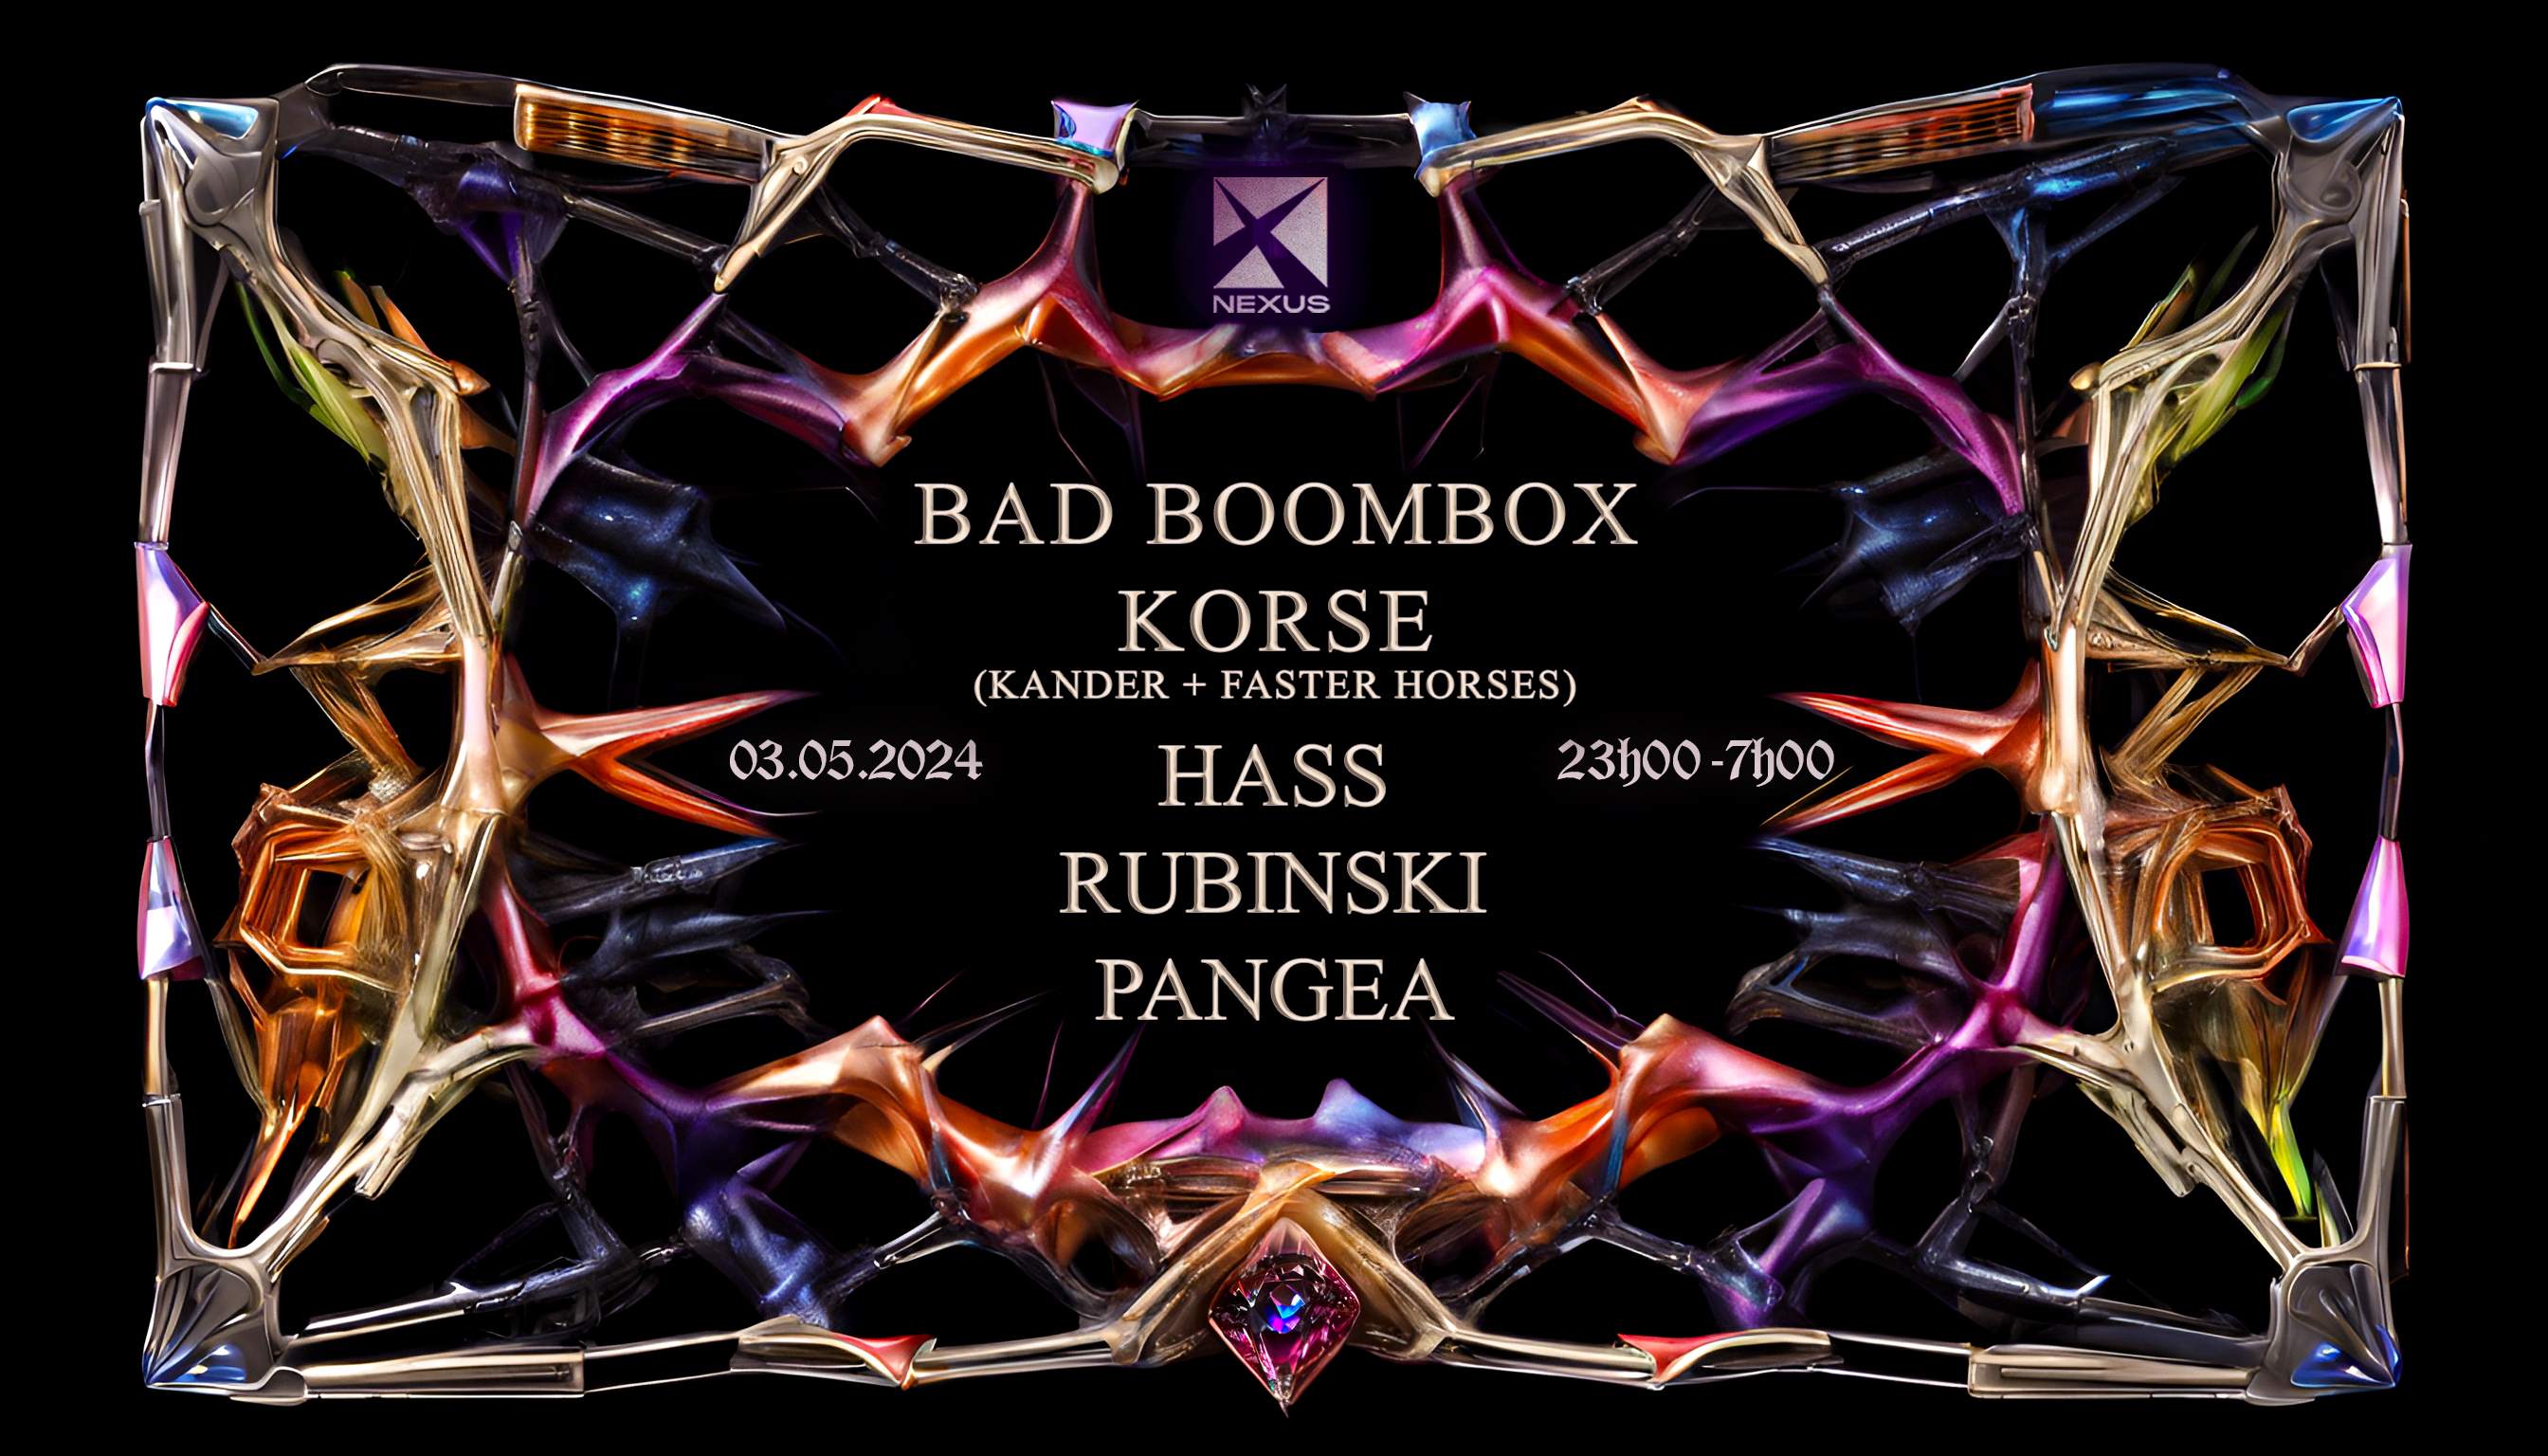 Nexus: Bad Boombox - Korse (Kander + Faster Horses) - Hass - Rubinski - Pangea - Página frontal